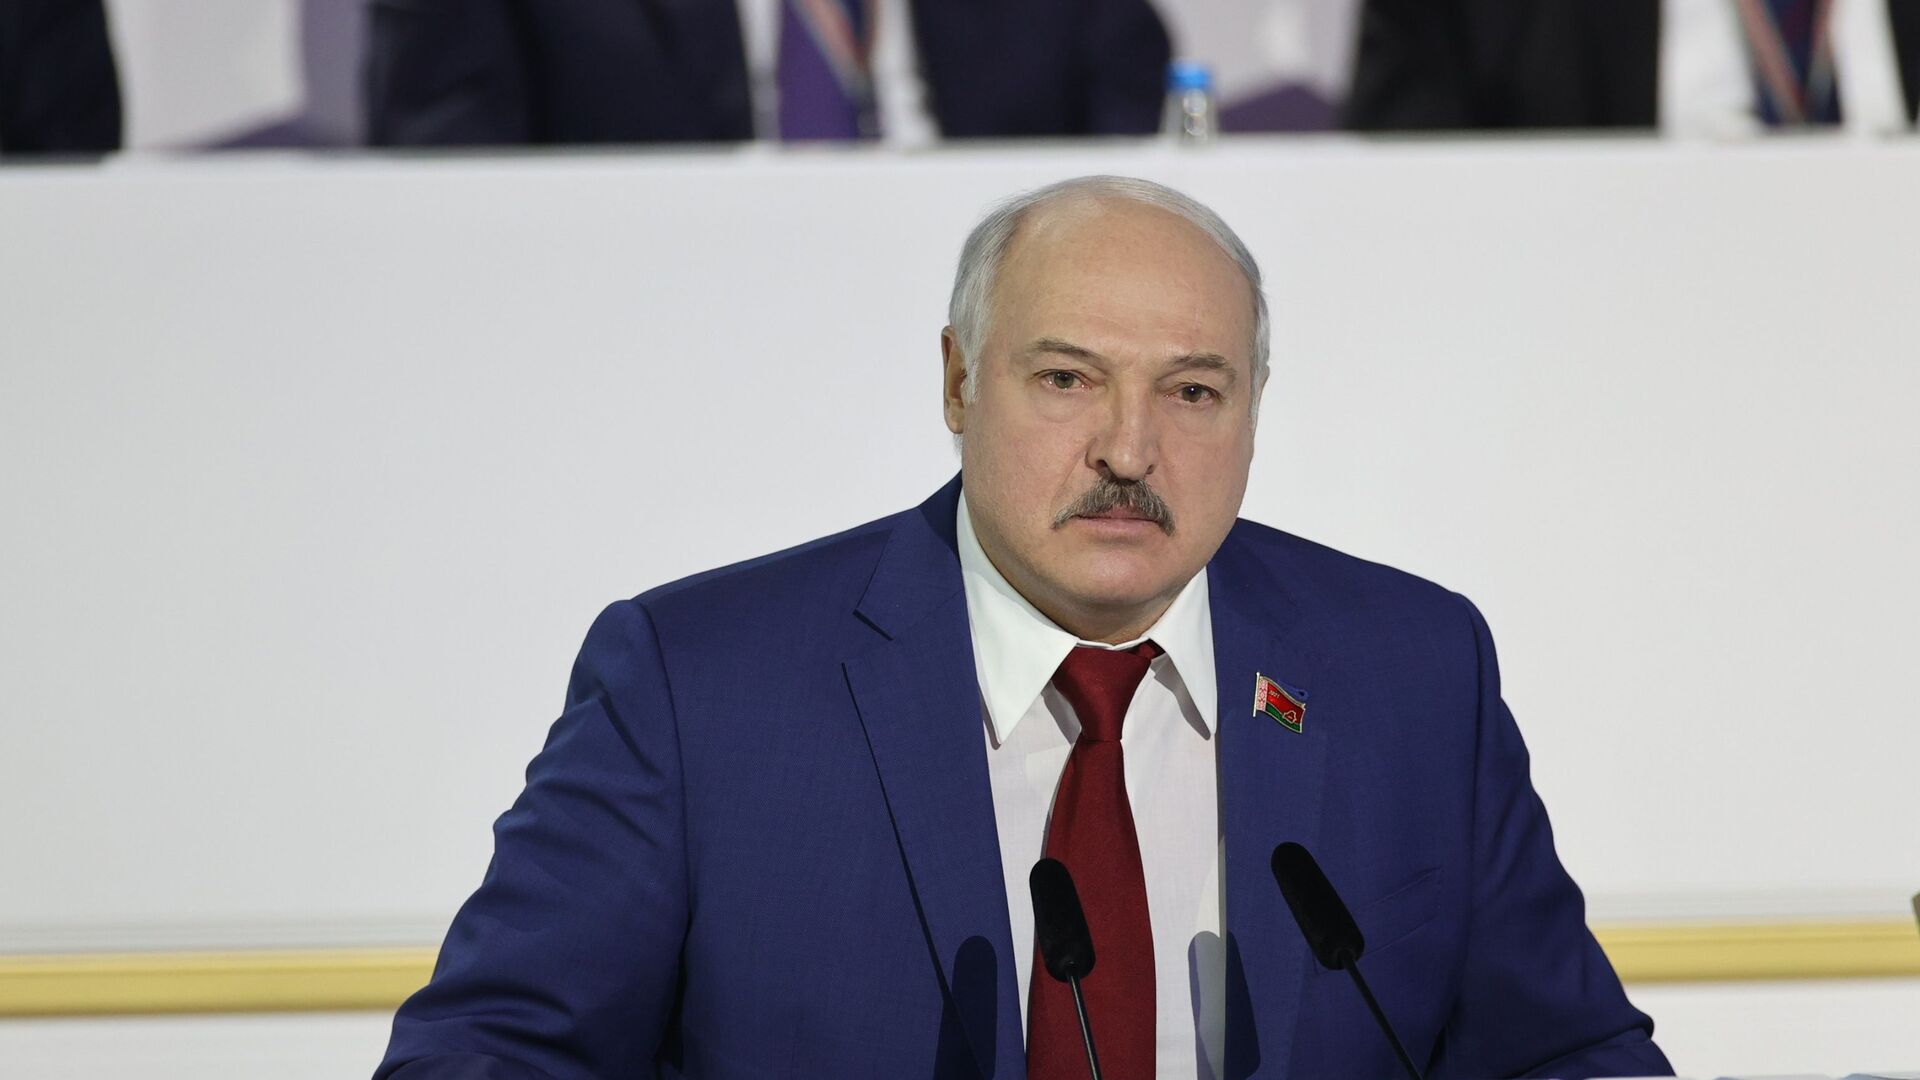 Baltarusijos prezidentas Aleksandras Lukašenka - Sputnik Lietuva, 1920, 09.08.2021